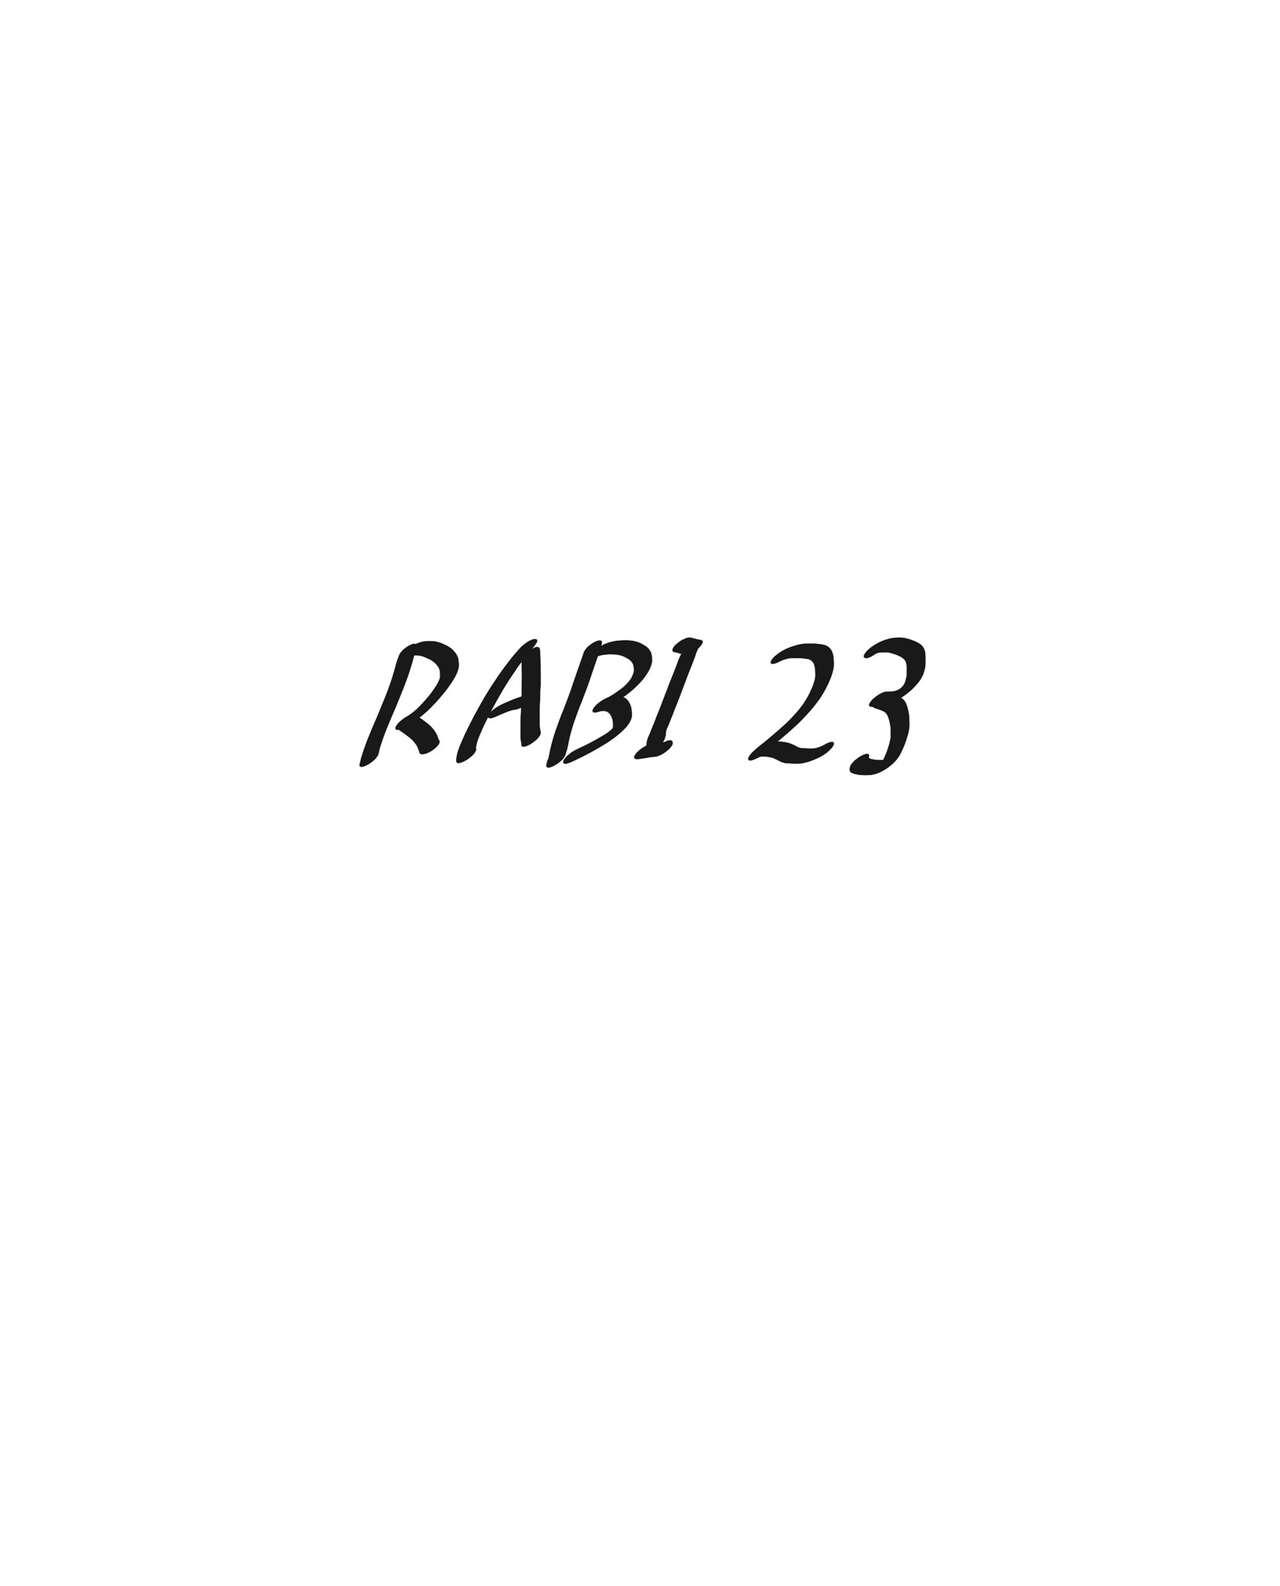 Secret rabi23 Funny - Page 2